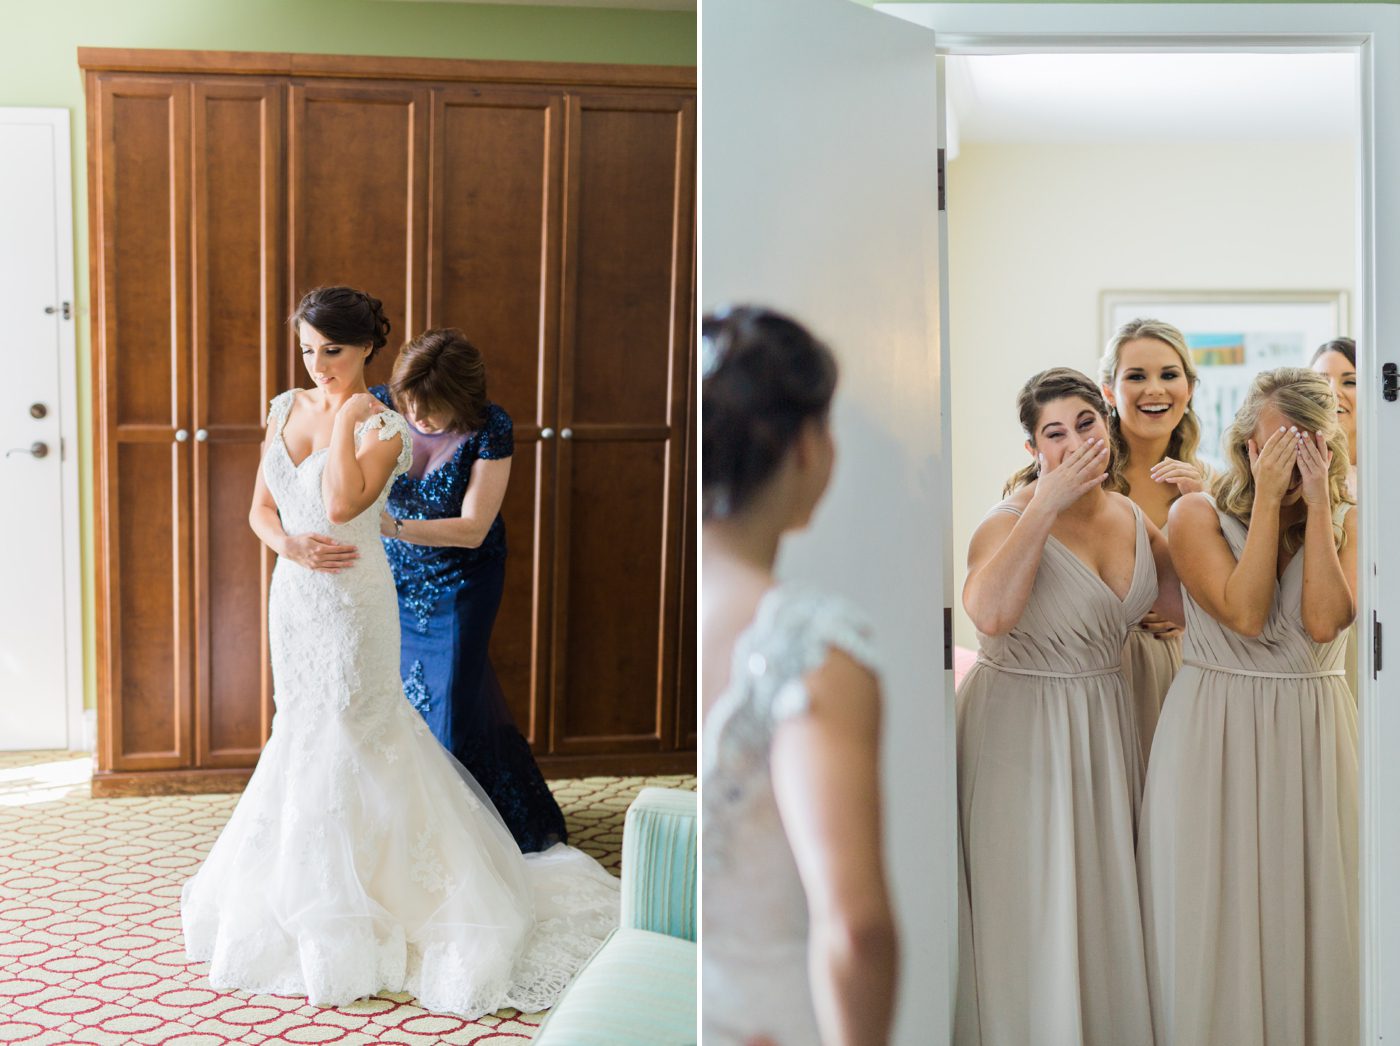 First look with bridesmaids | Vinoy renaissance wedding photos | St Petersburg FL wedding photographersCatherine Ann Photography